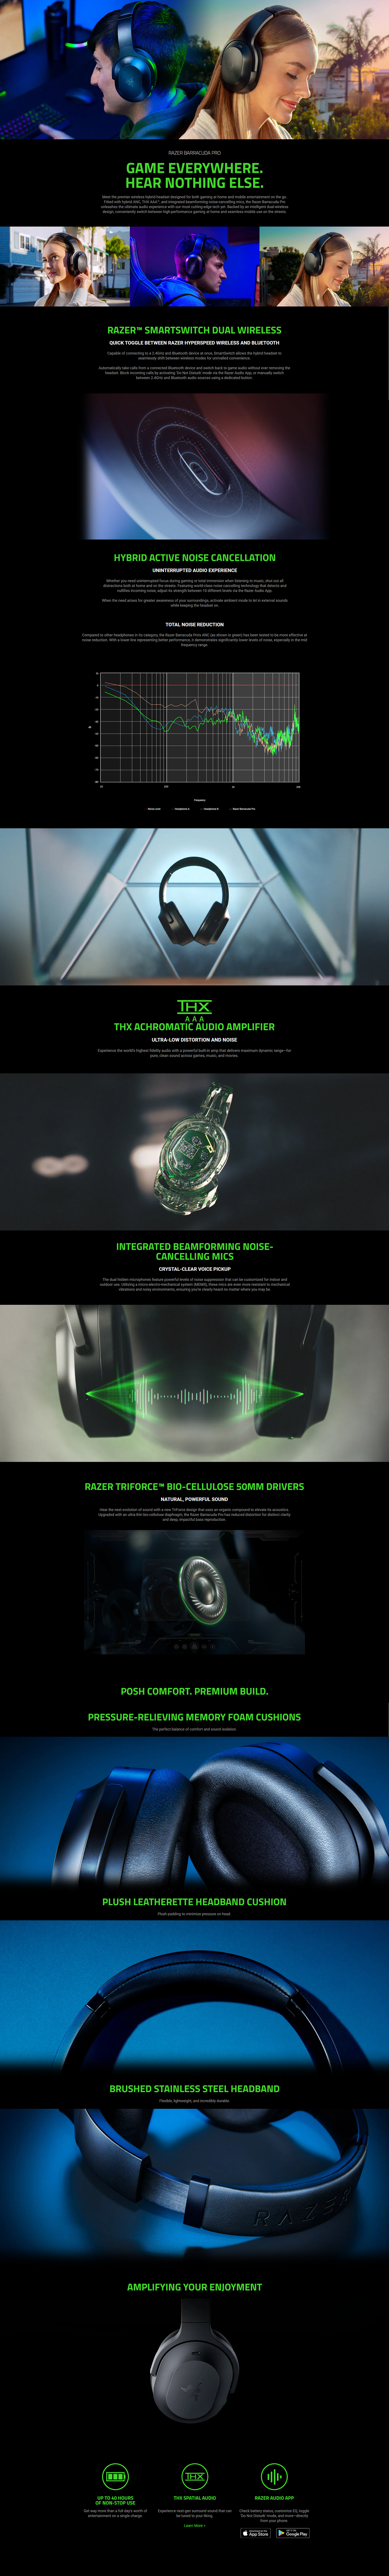 Razer_Barracuda_Pro_Gaming_Headphones_Noise_Cancelling_Wireless